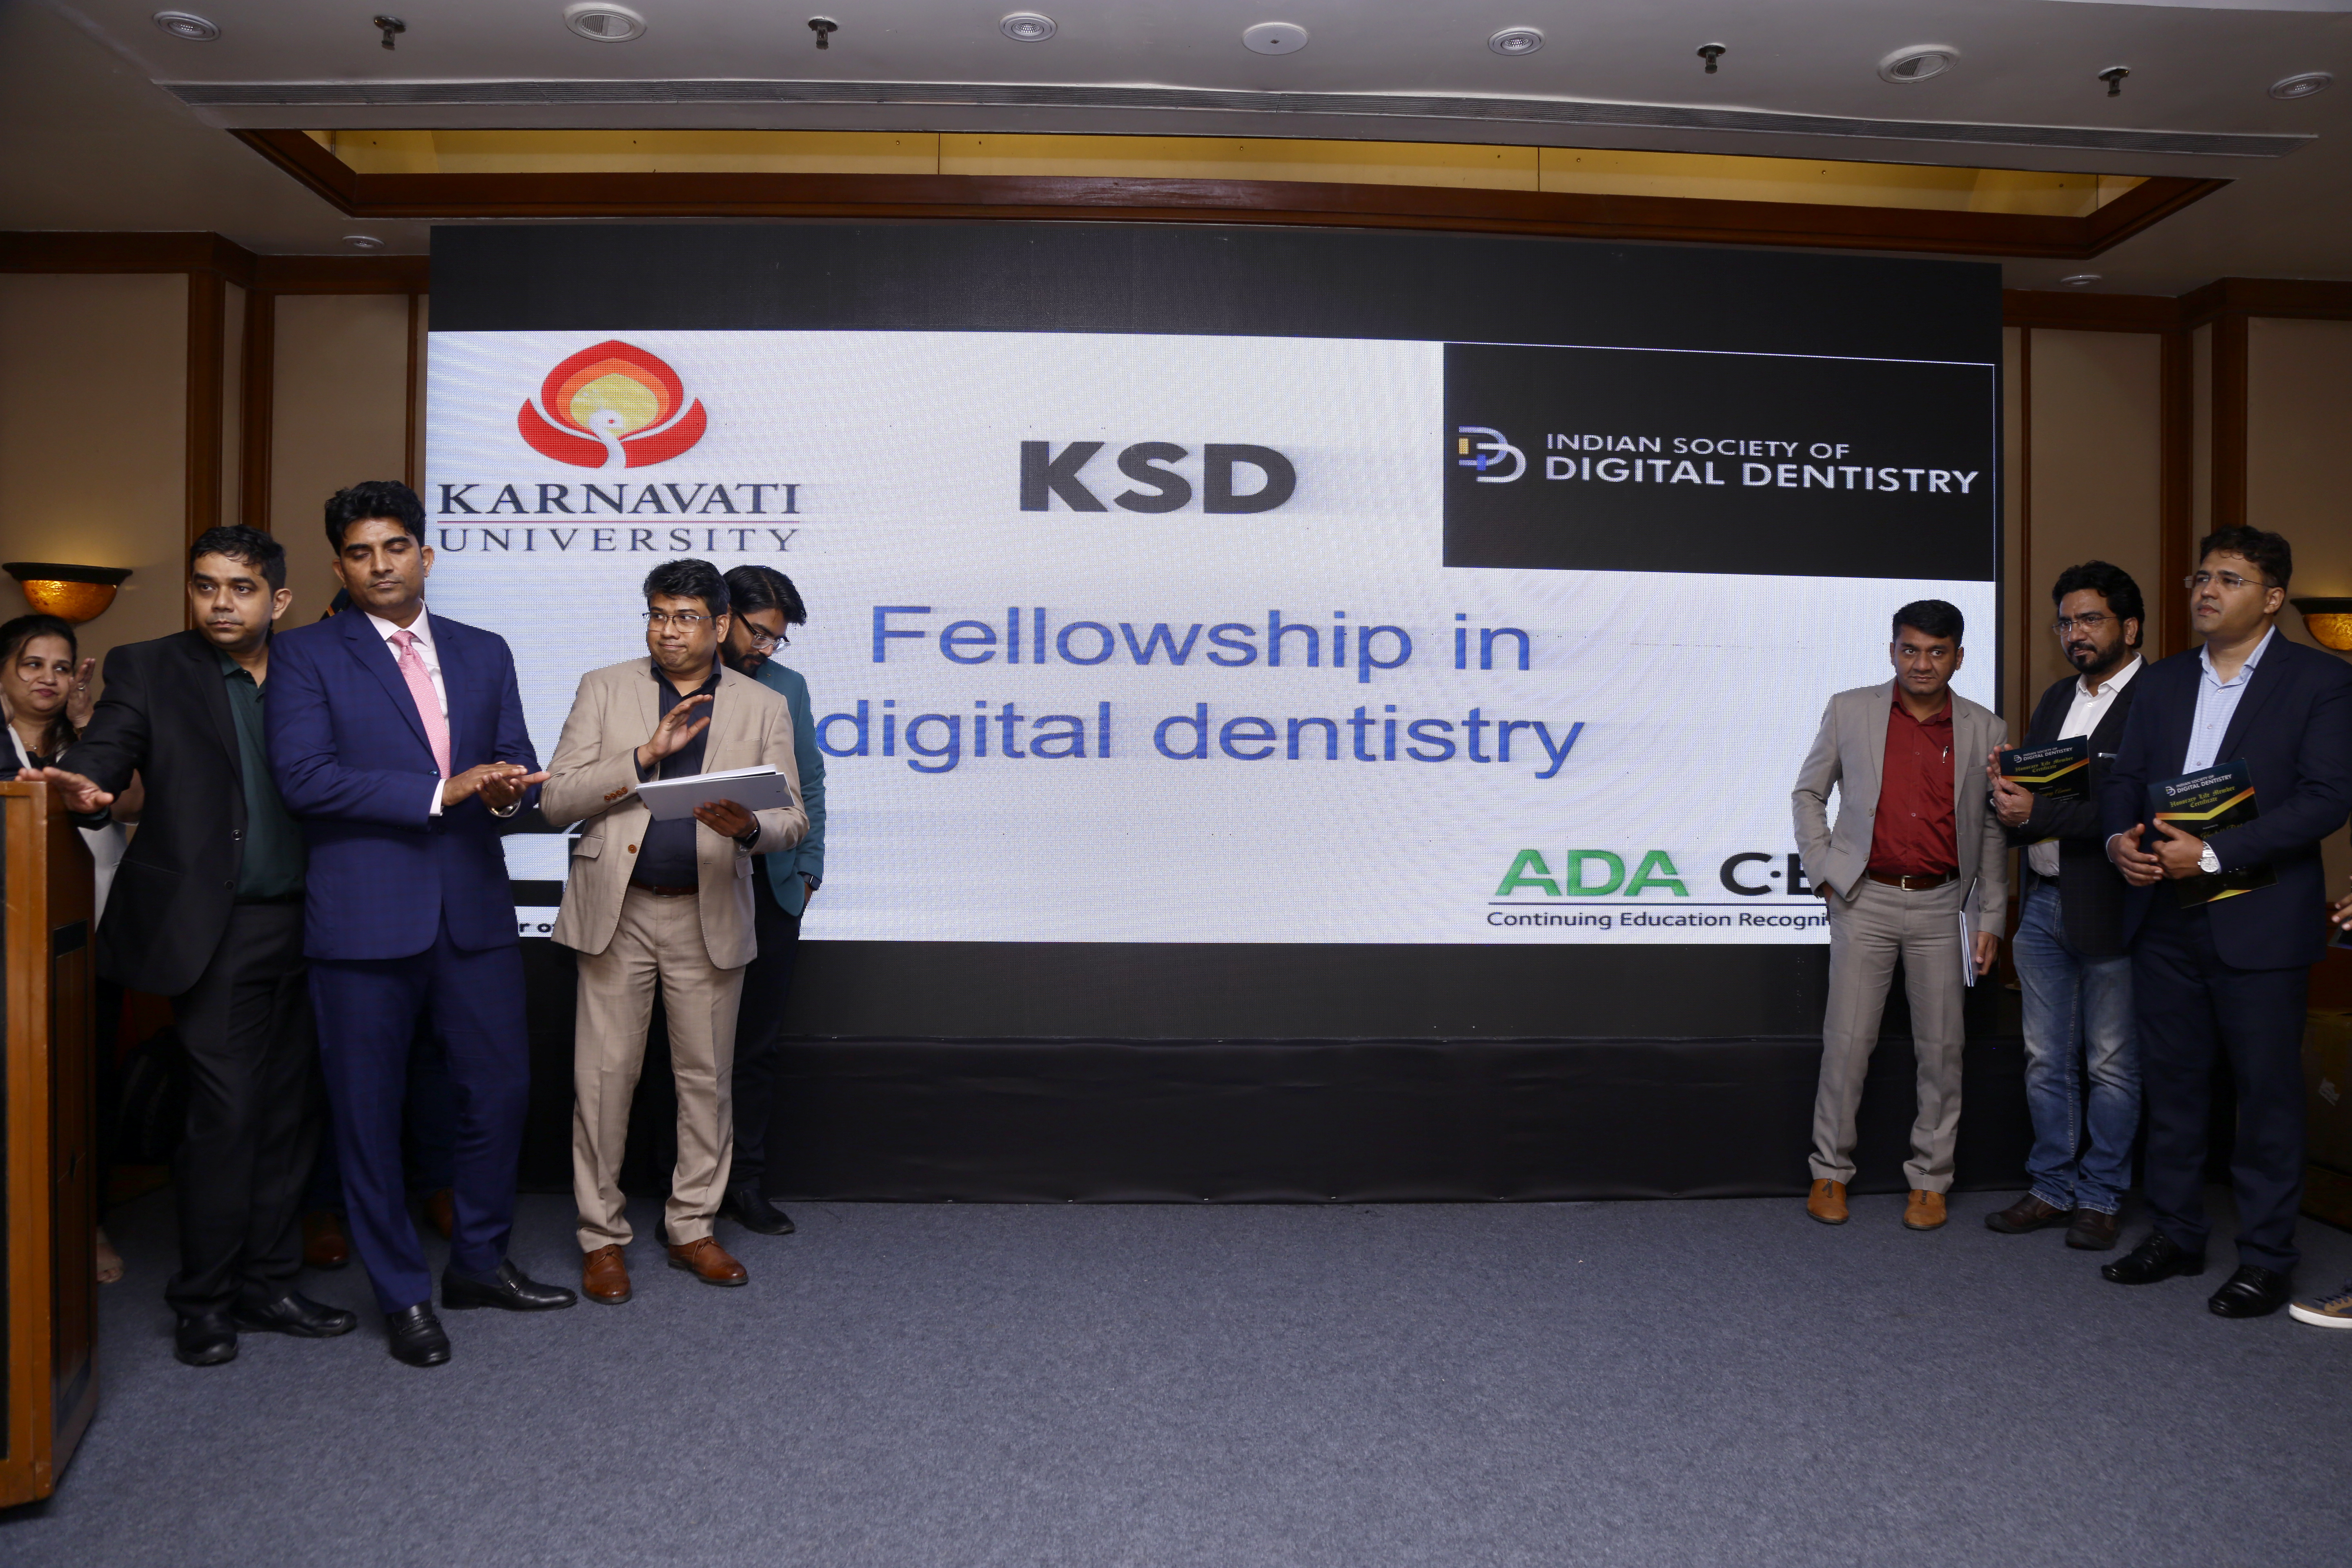 Fellowship in digital dentistry